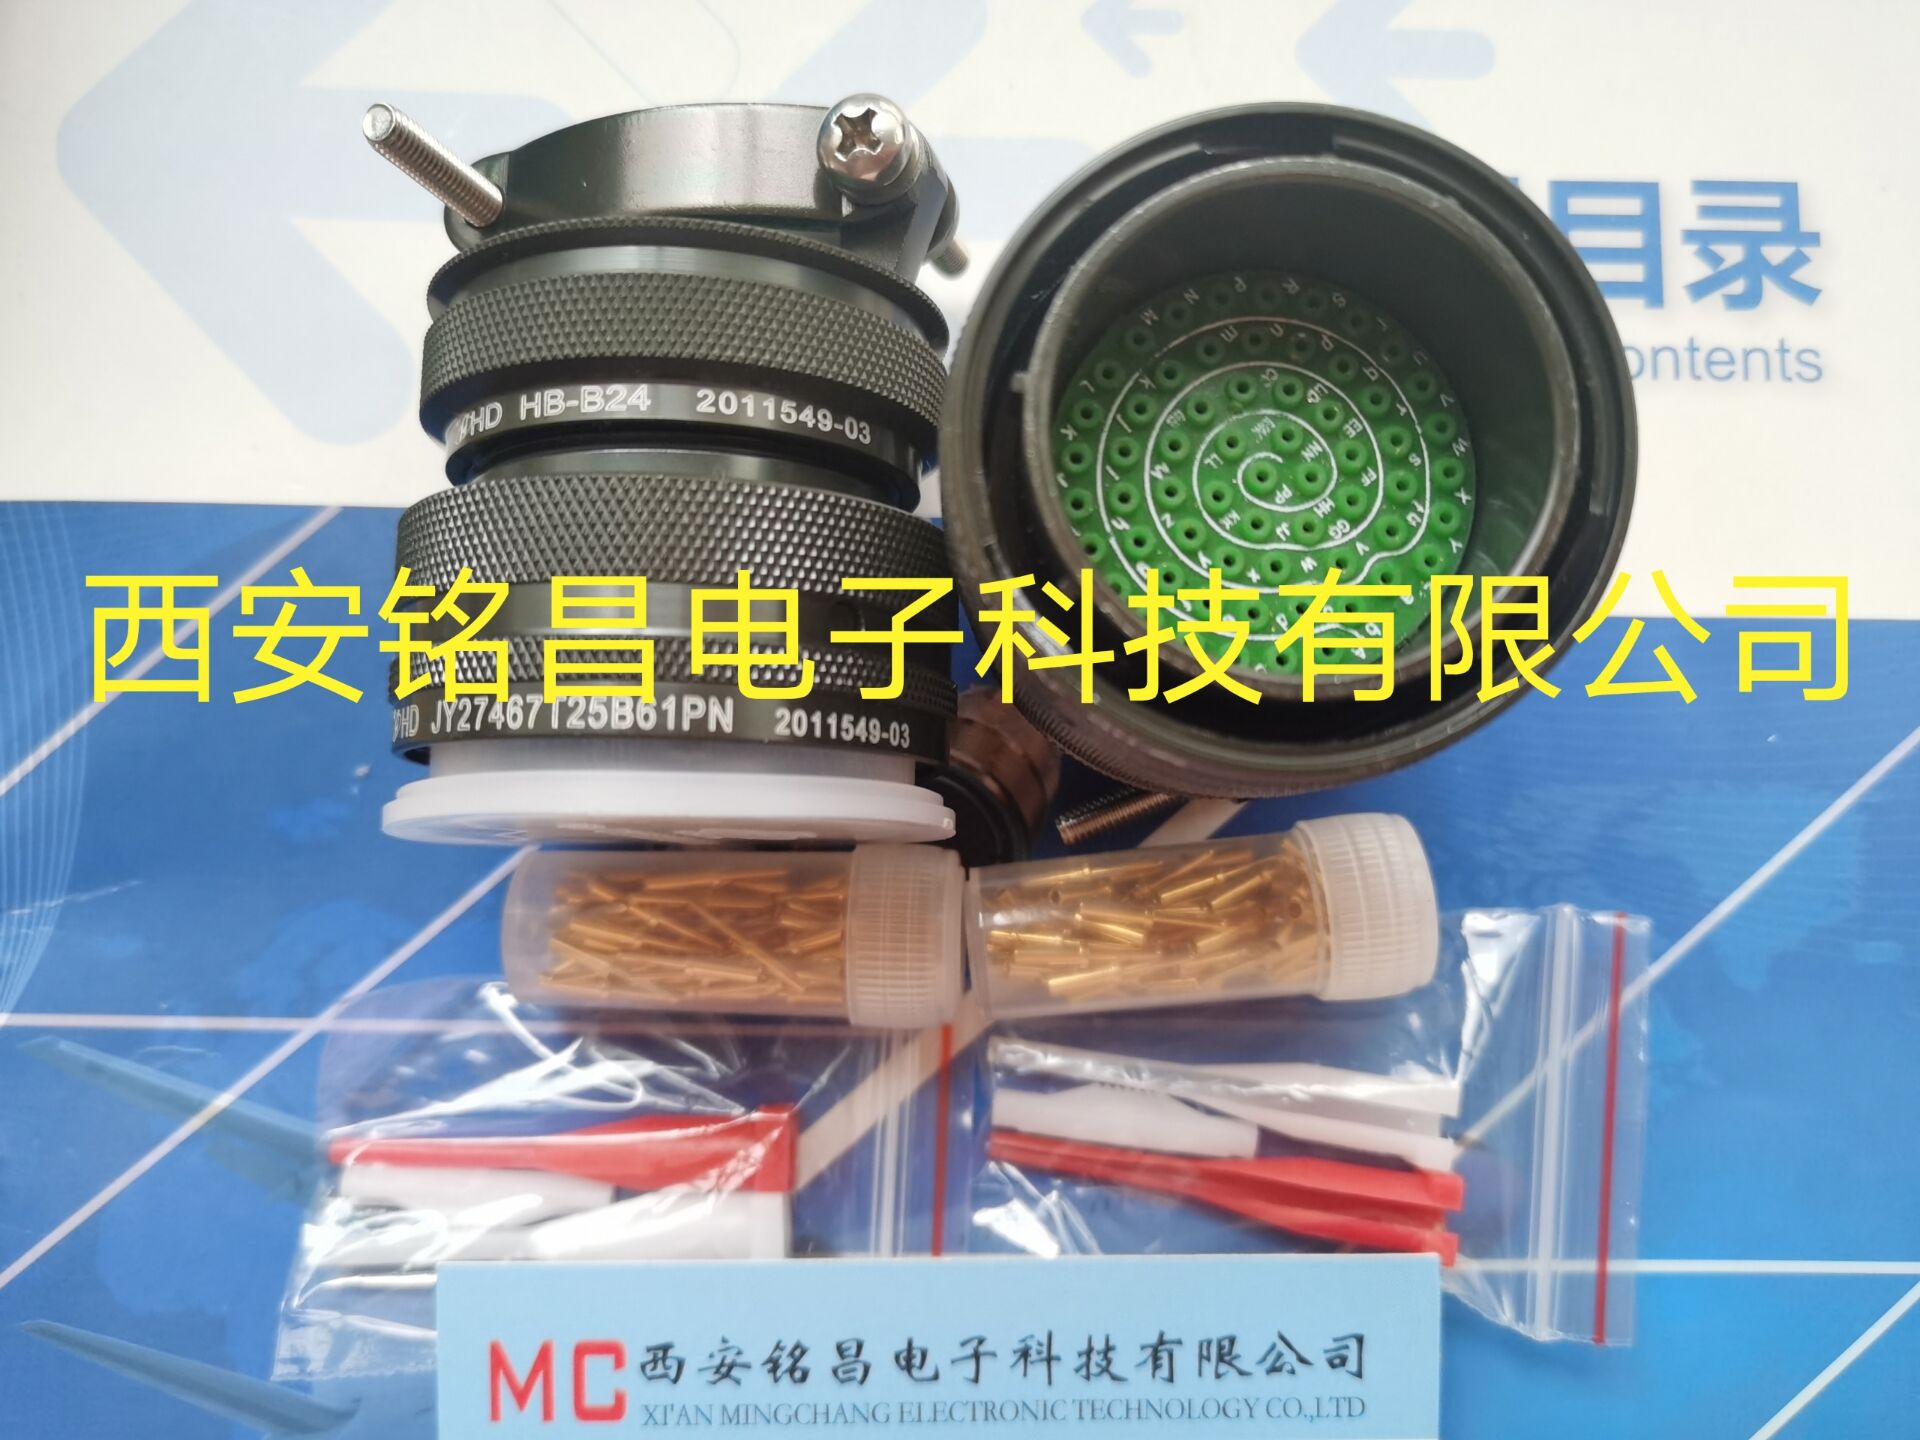 MCDZ厂家现货销售JY27656T09N3PN-U圆形连接器-西安铭昌